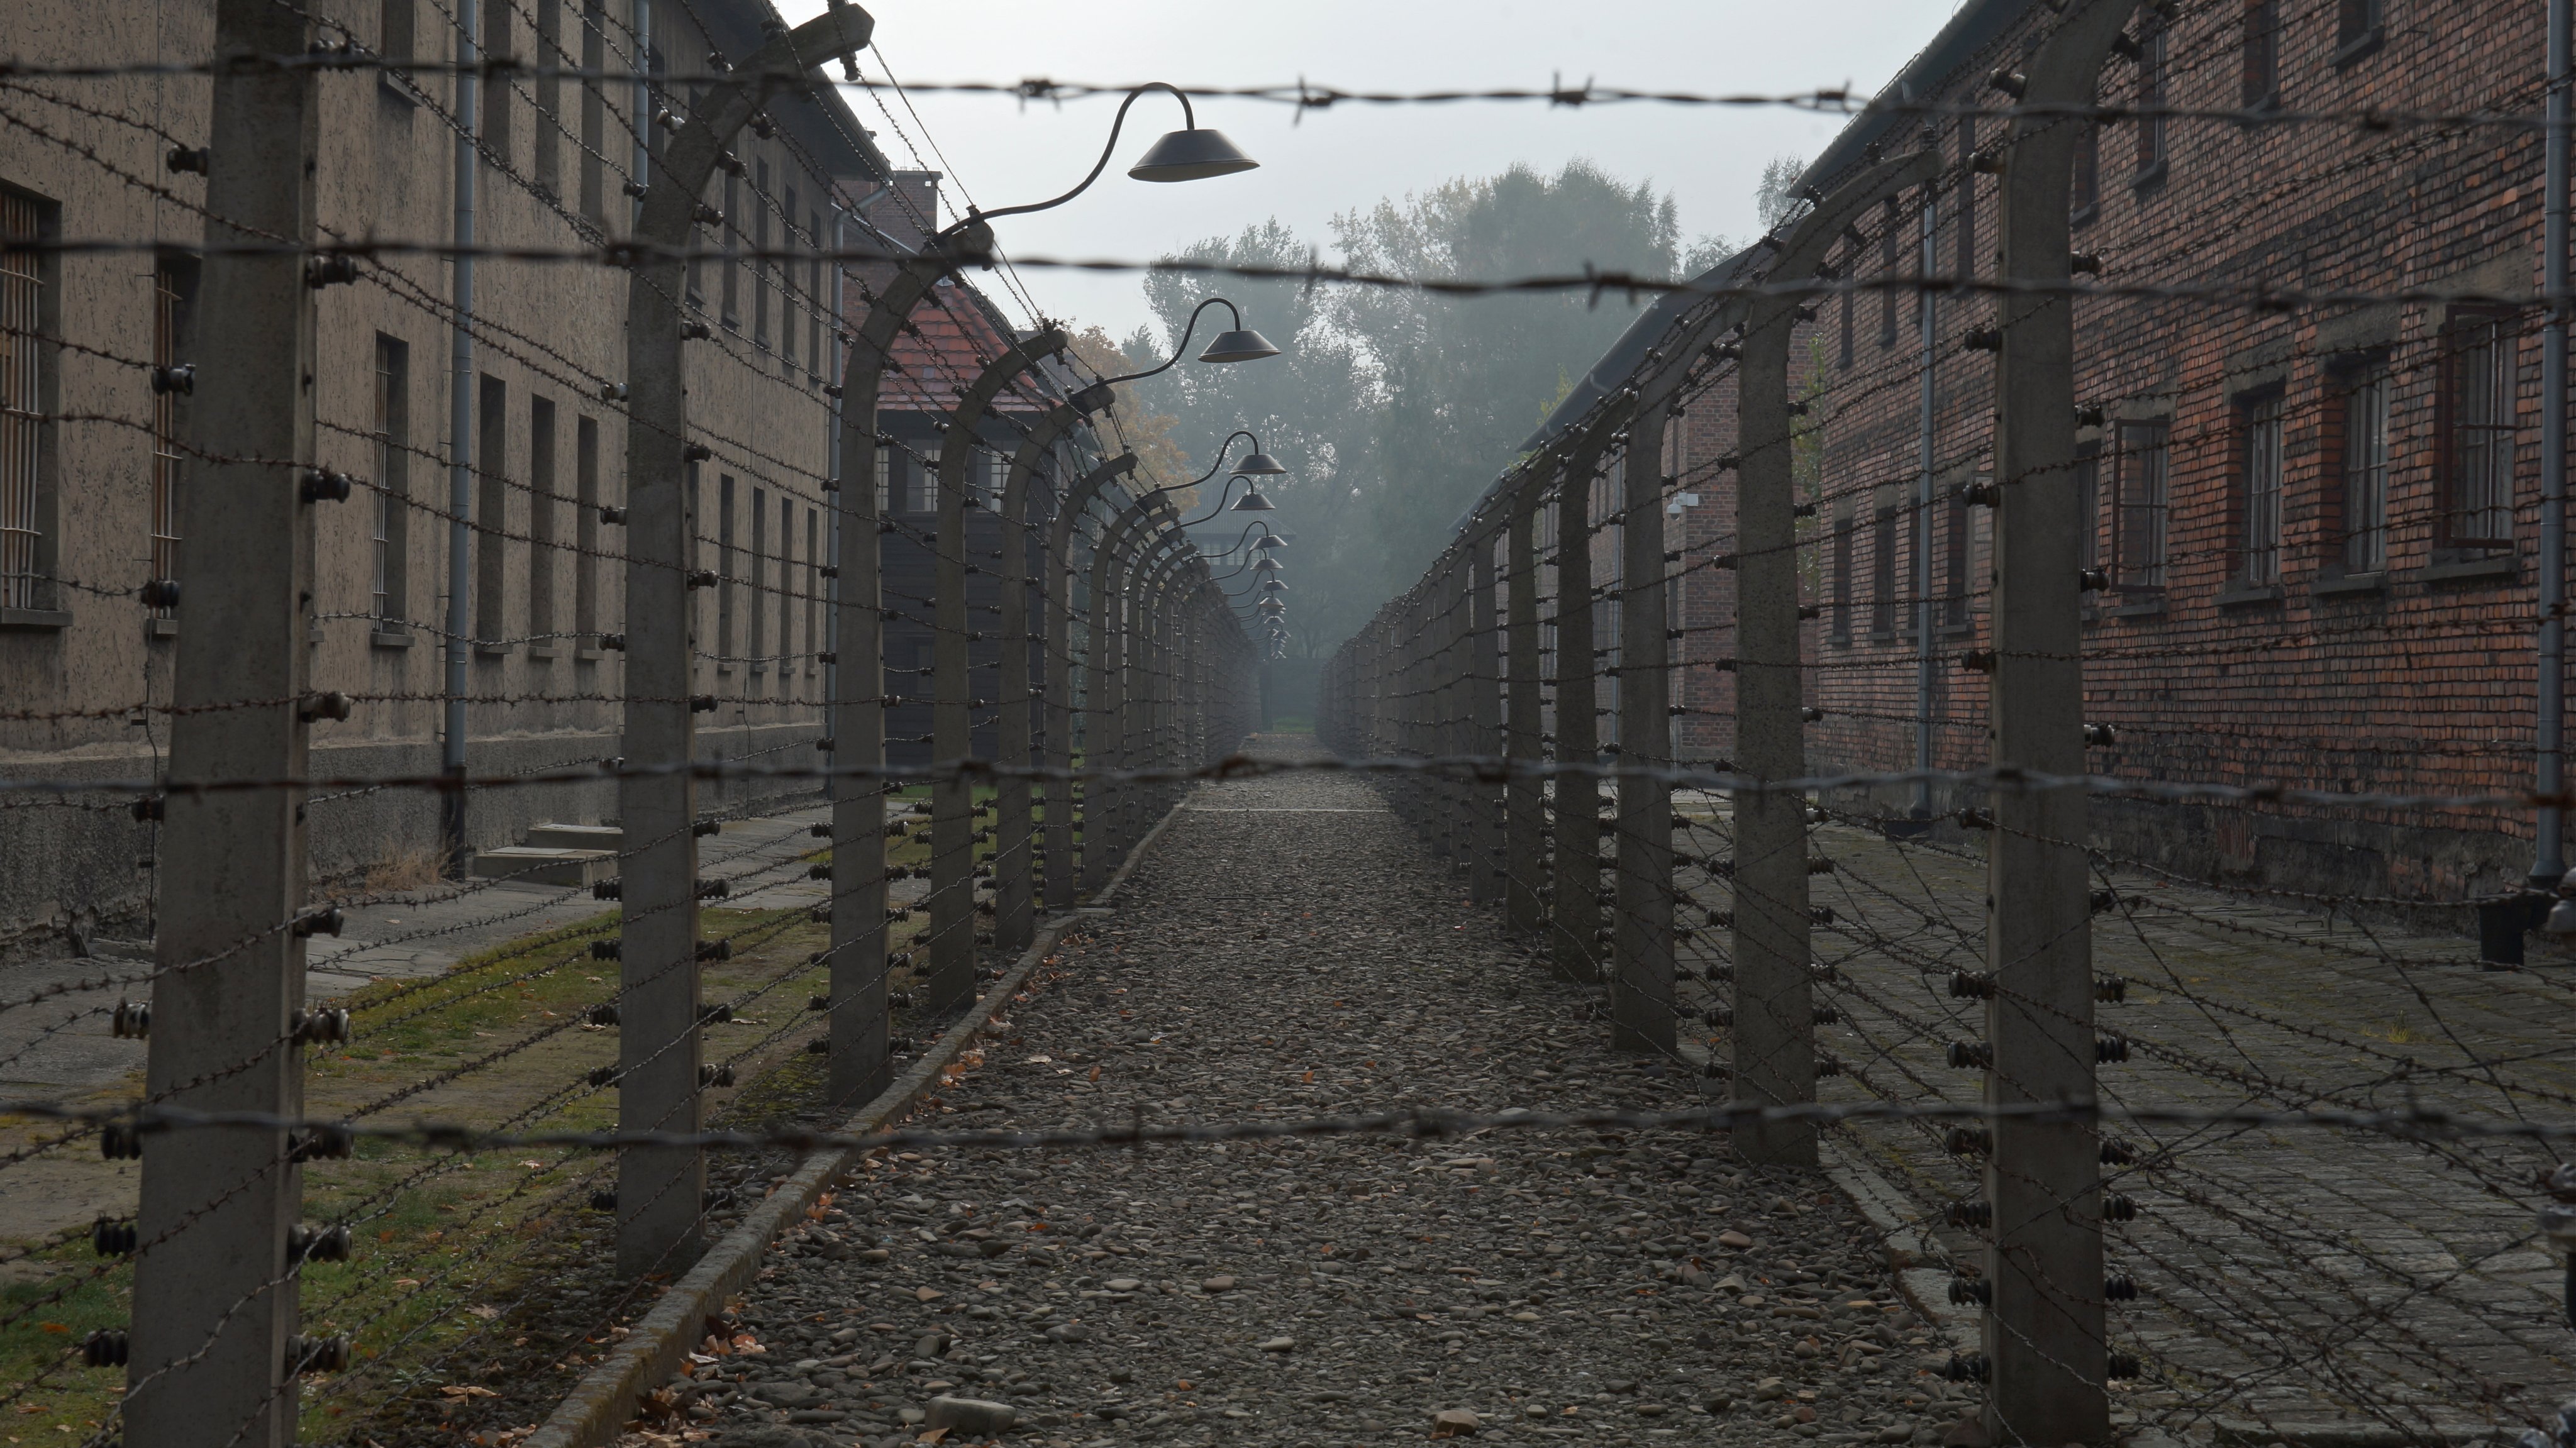 Auschwitz-Birkenau Memorial And Museum